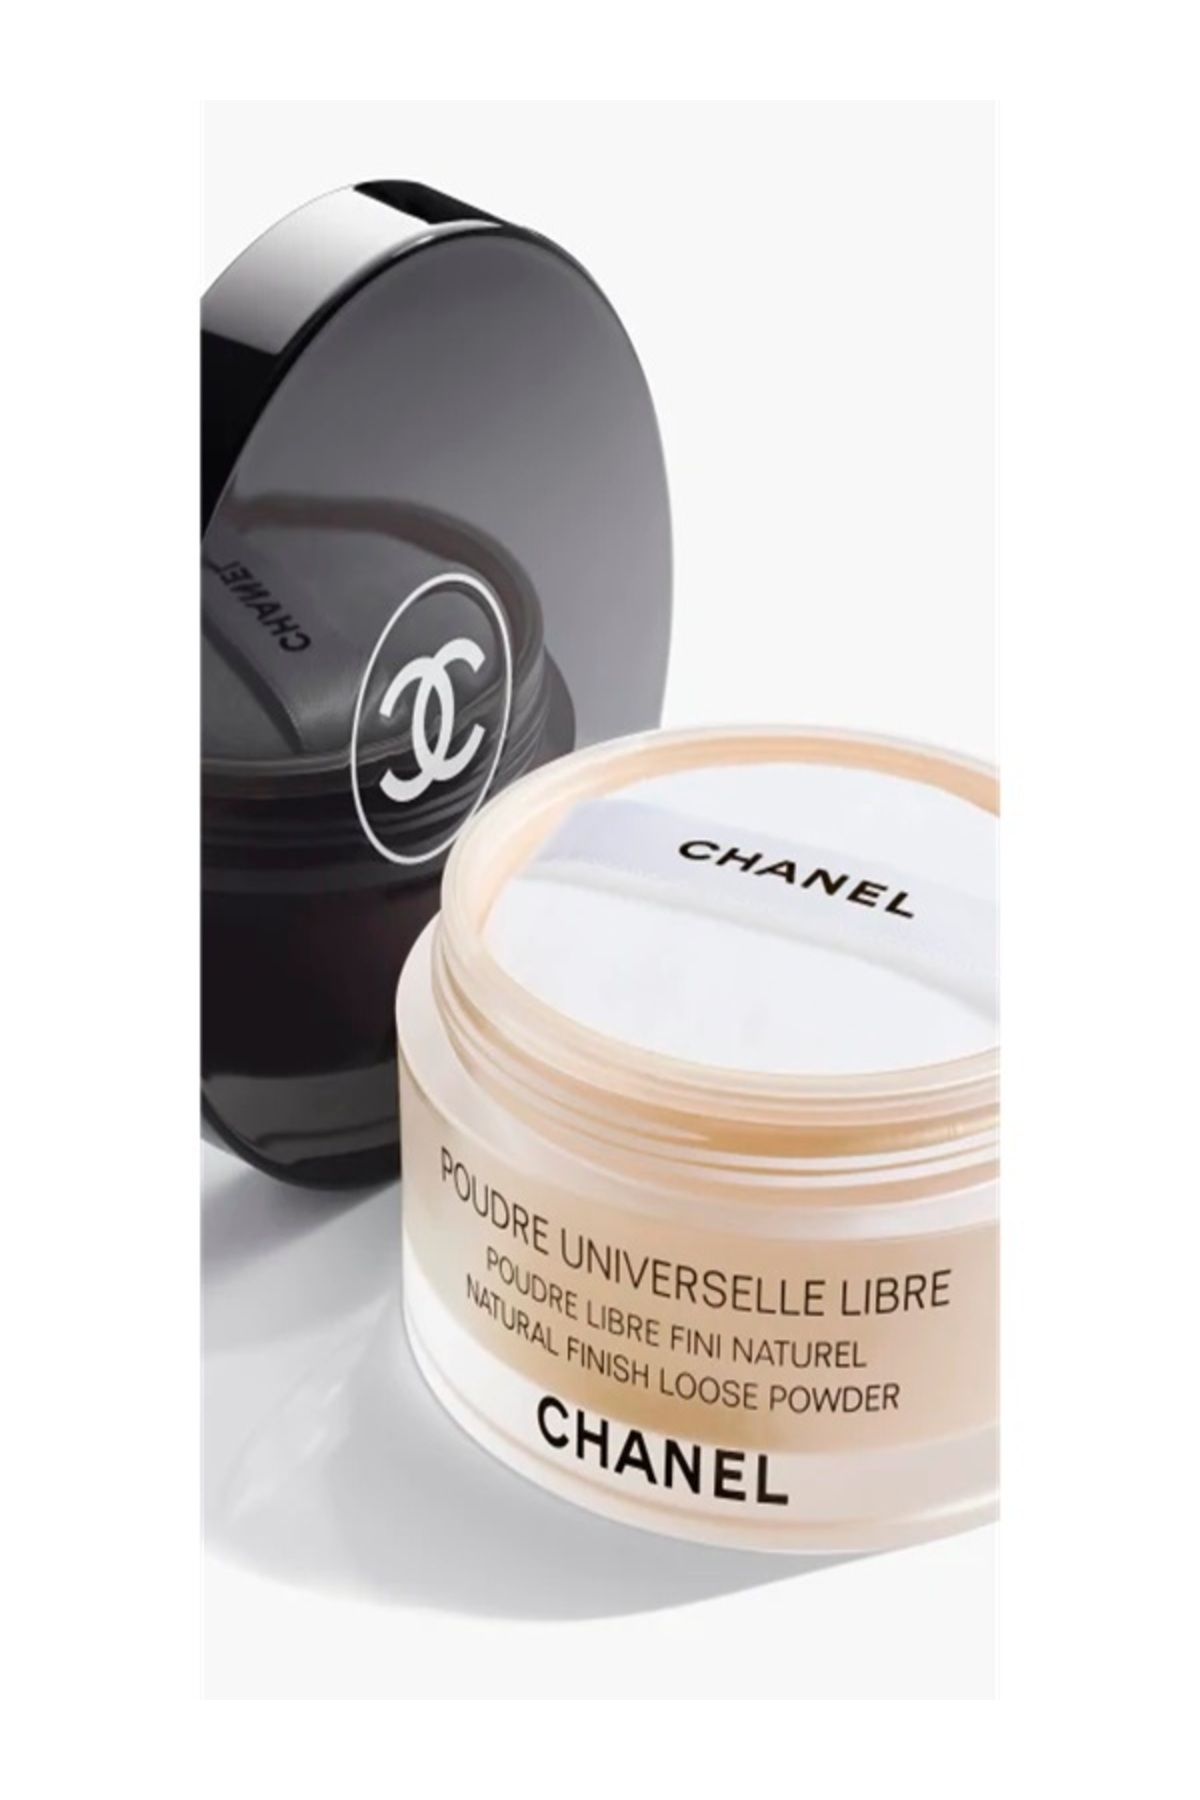 Chanel پودر فیکس کننده آرایش UNIVERSELLE LIBRE مات کننده و ضد براقیت رنگ بژ روشن